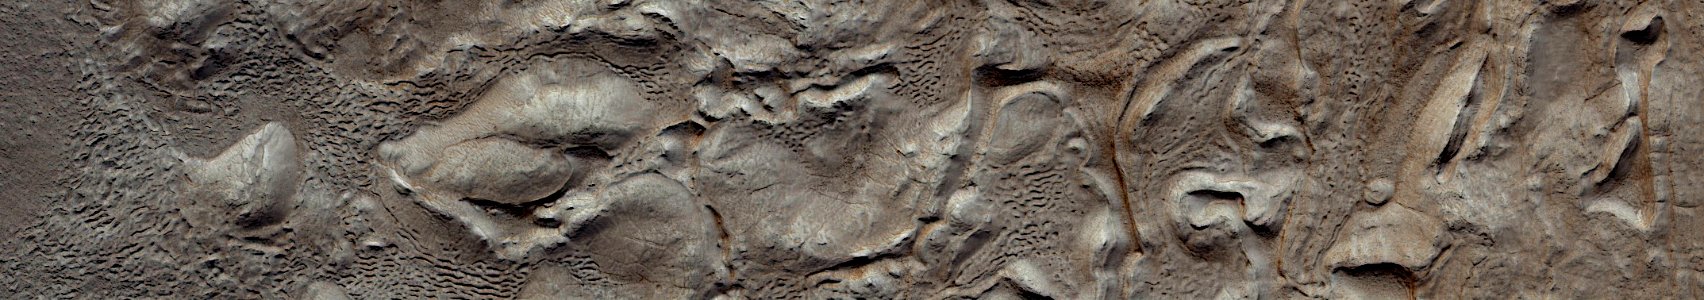 Mars - Stunning Landscape Near Mamers Valles